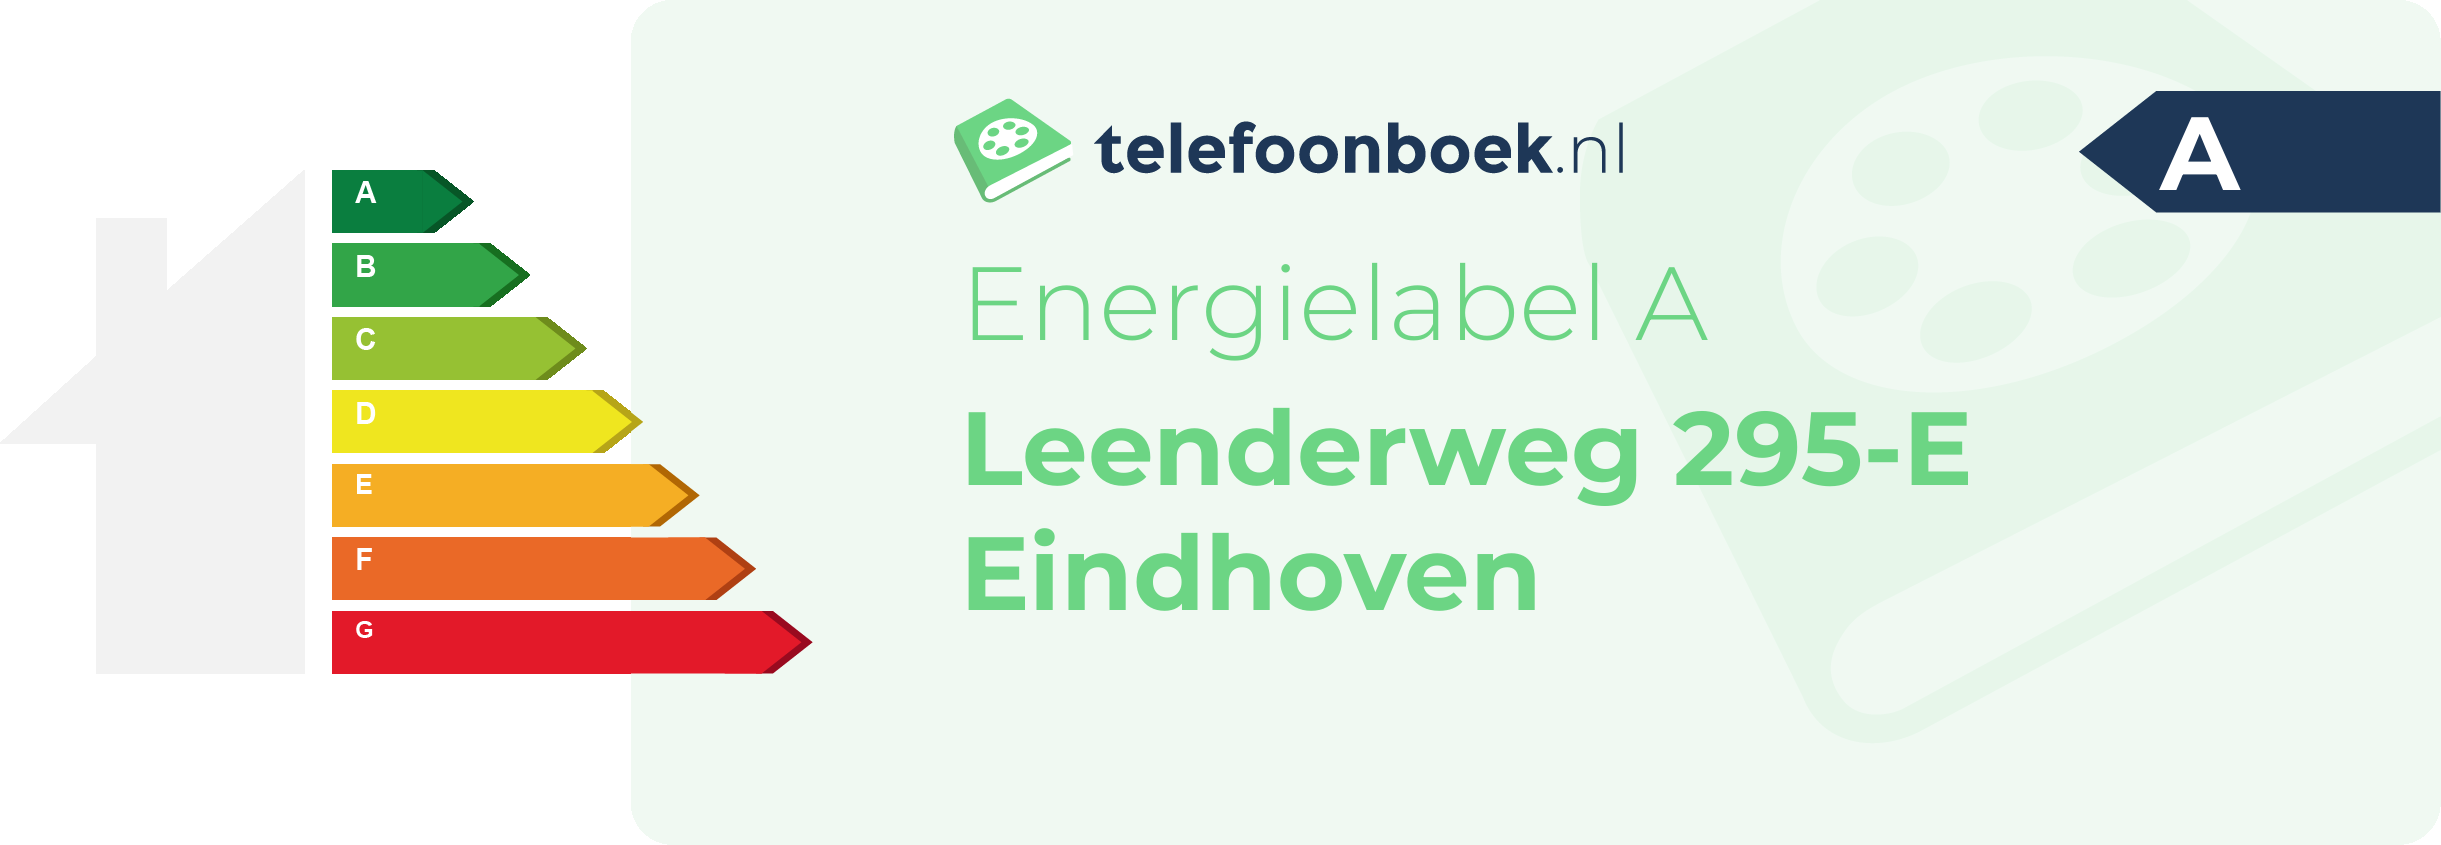 Energielabel Leenderweg 295-E Eindhoven